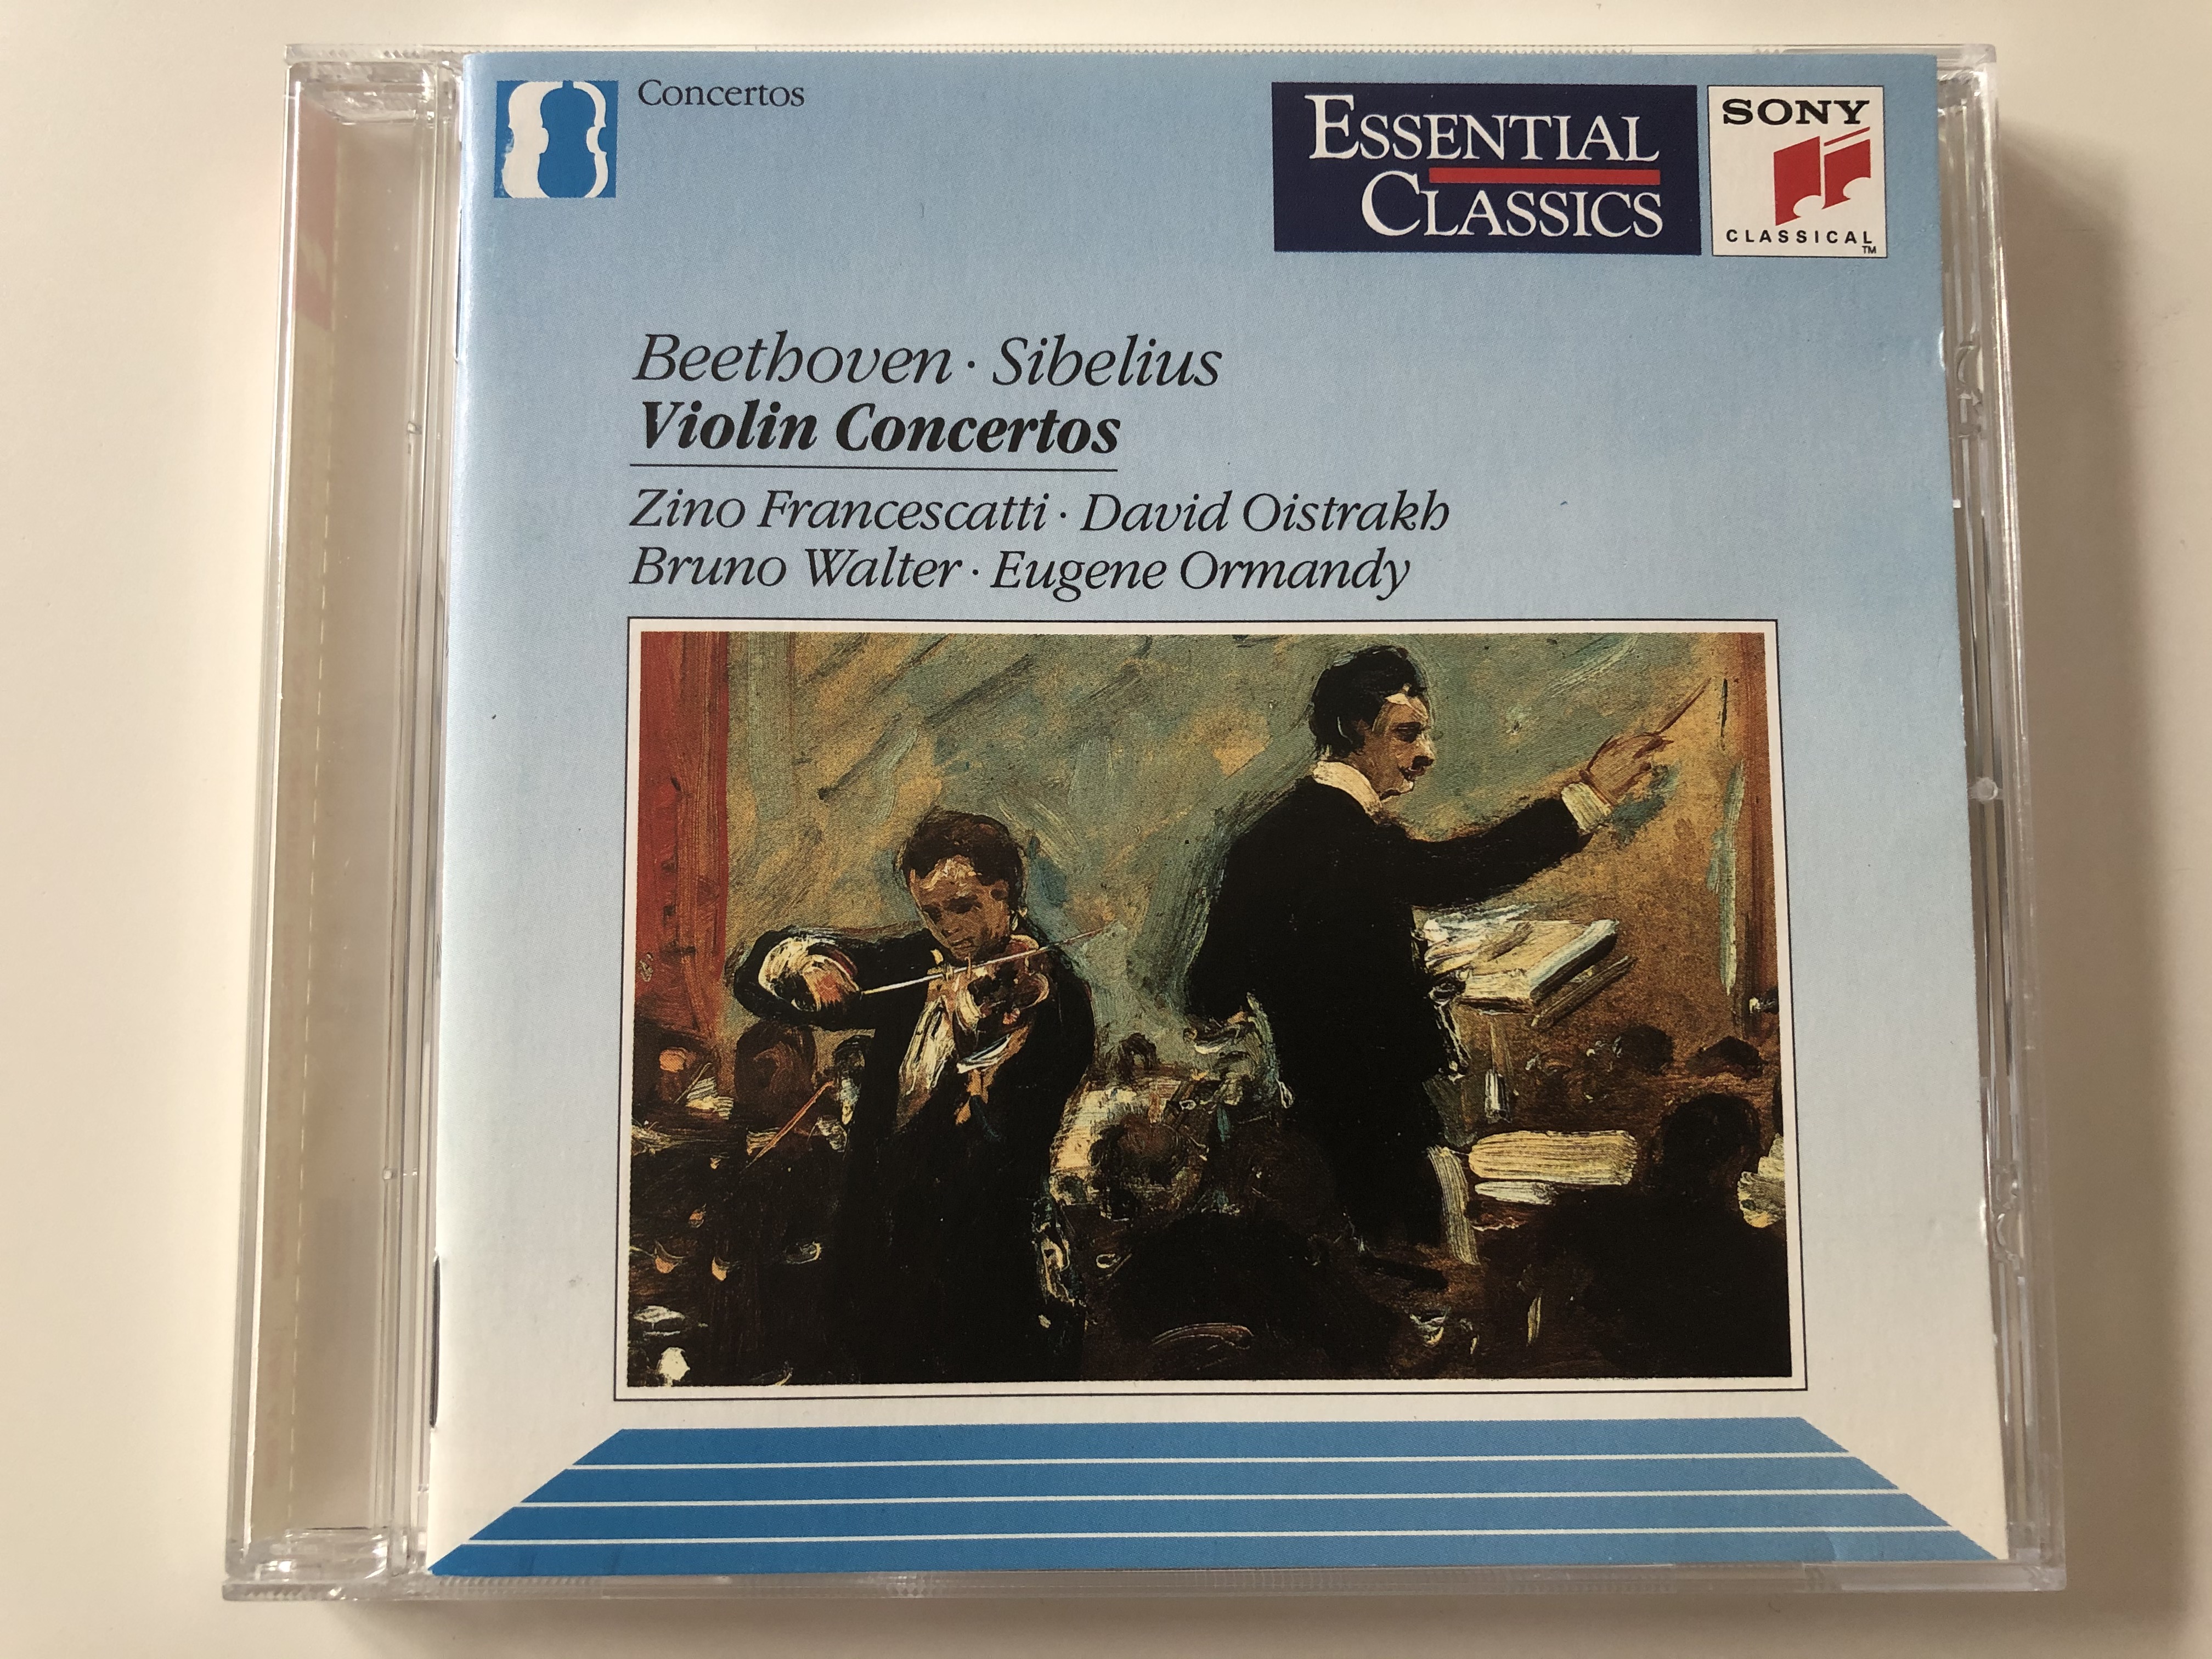 beethoven-sibelius-violin-concertos-zino-francescatti-david-oistrach-bruno-walter-eugene-ormandy-sony-classical-audio-cd-1991-sbk-47659-1-.jpg